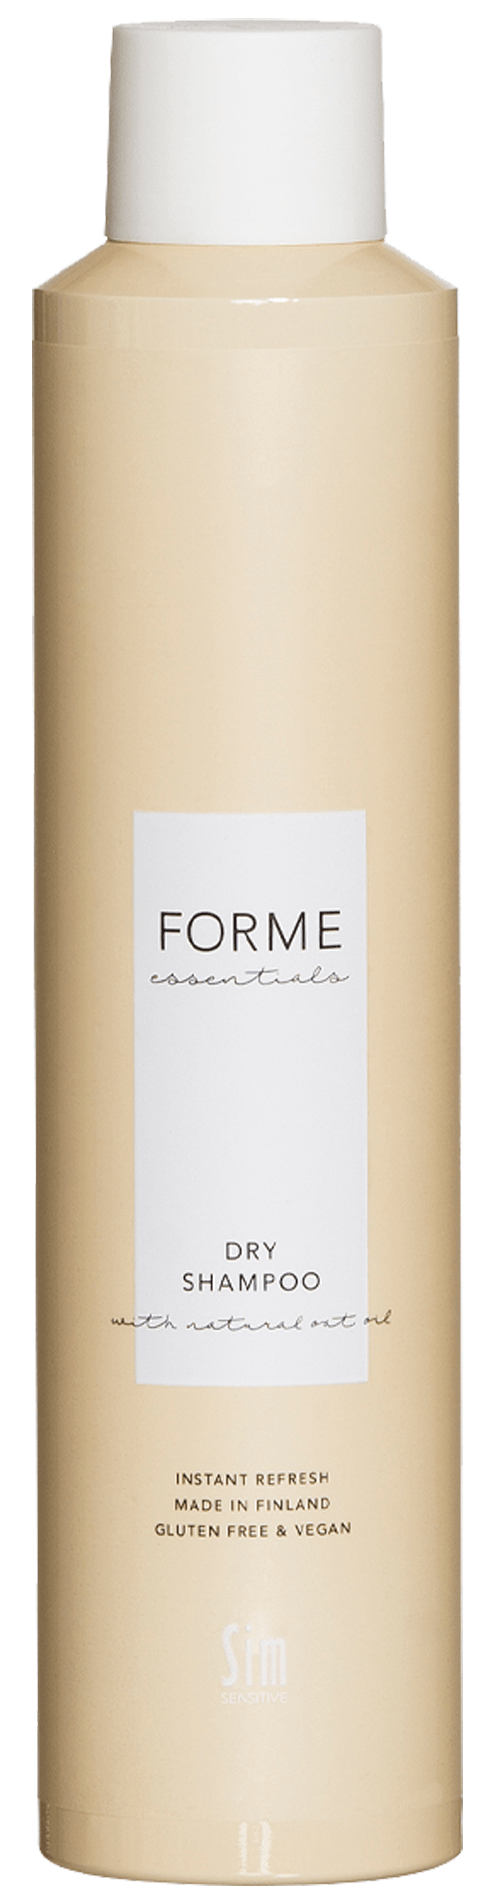 Forme Dry Shampoo Сухой шампунь 300 мл 